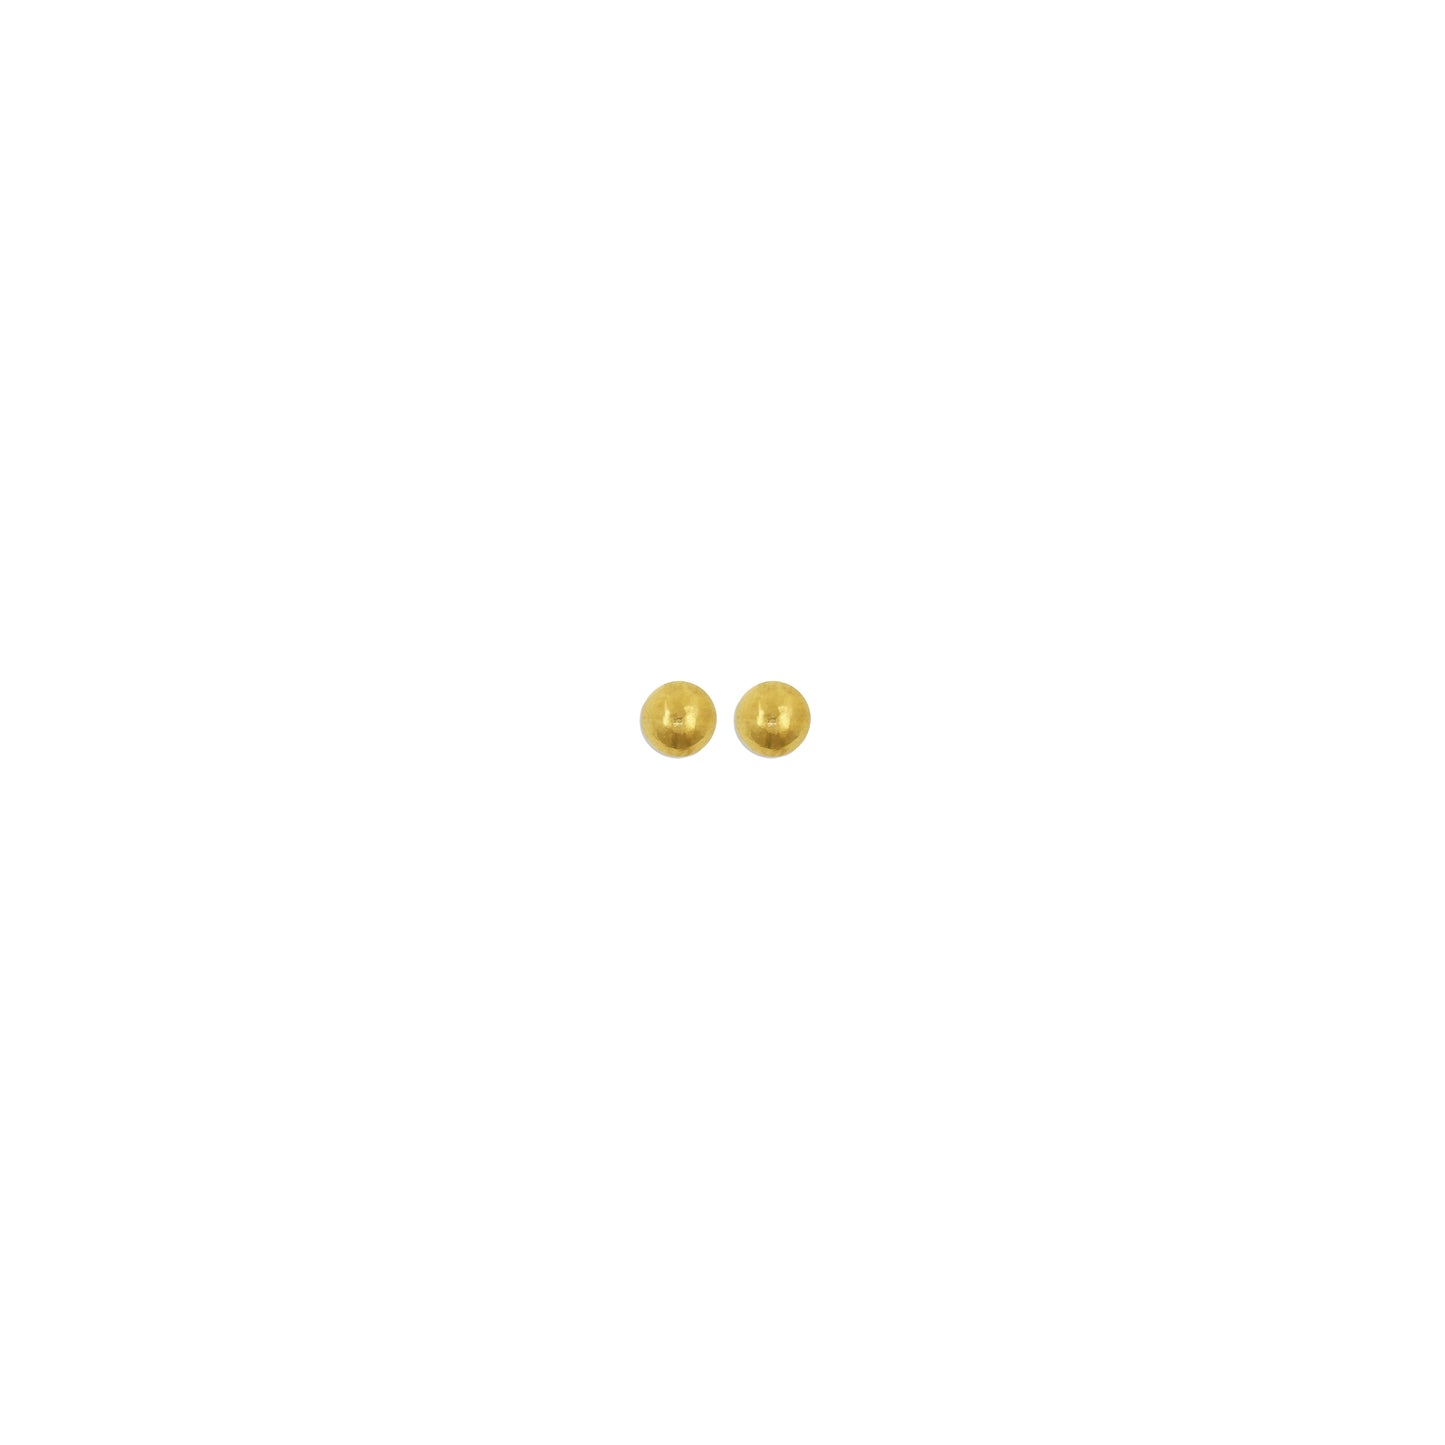 Gold Ball Earrings - Pair